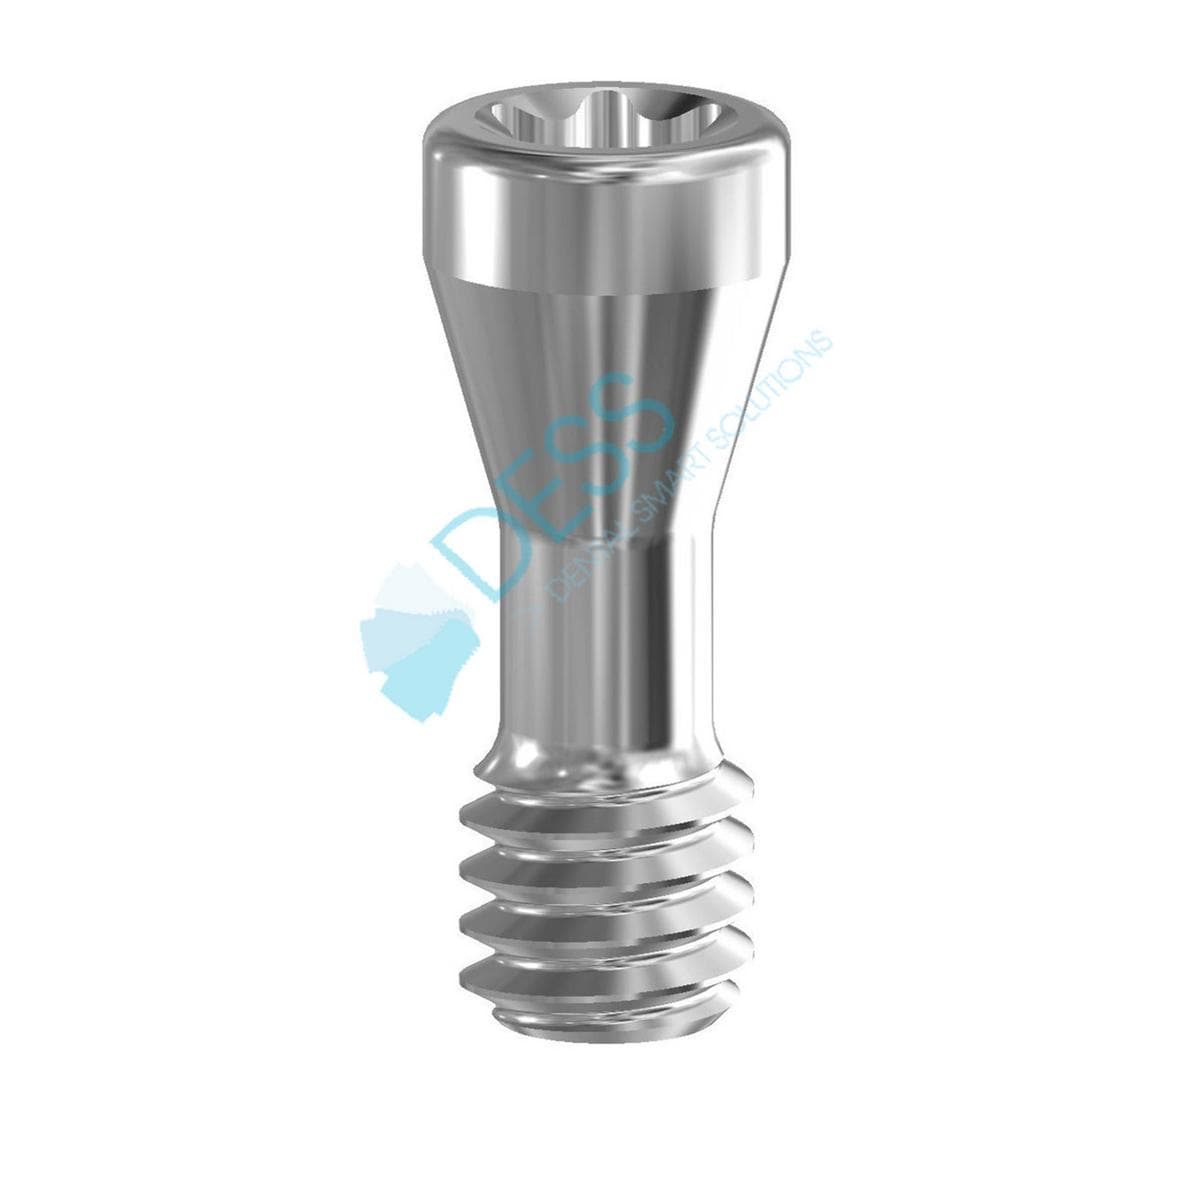 Abutmentschraube Torx® auf Implantat - kompatibel mit Straumann® - RN Ø 4,8 mm / WN Ø 6,5 mm, Standard, Packung 1 Stück